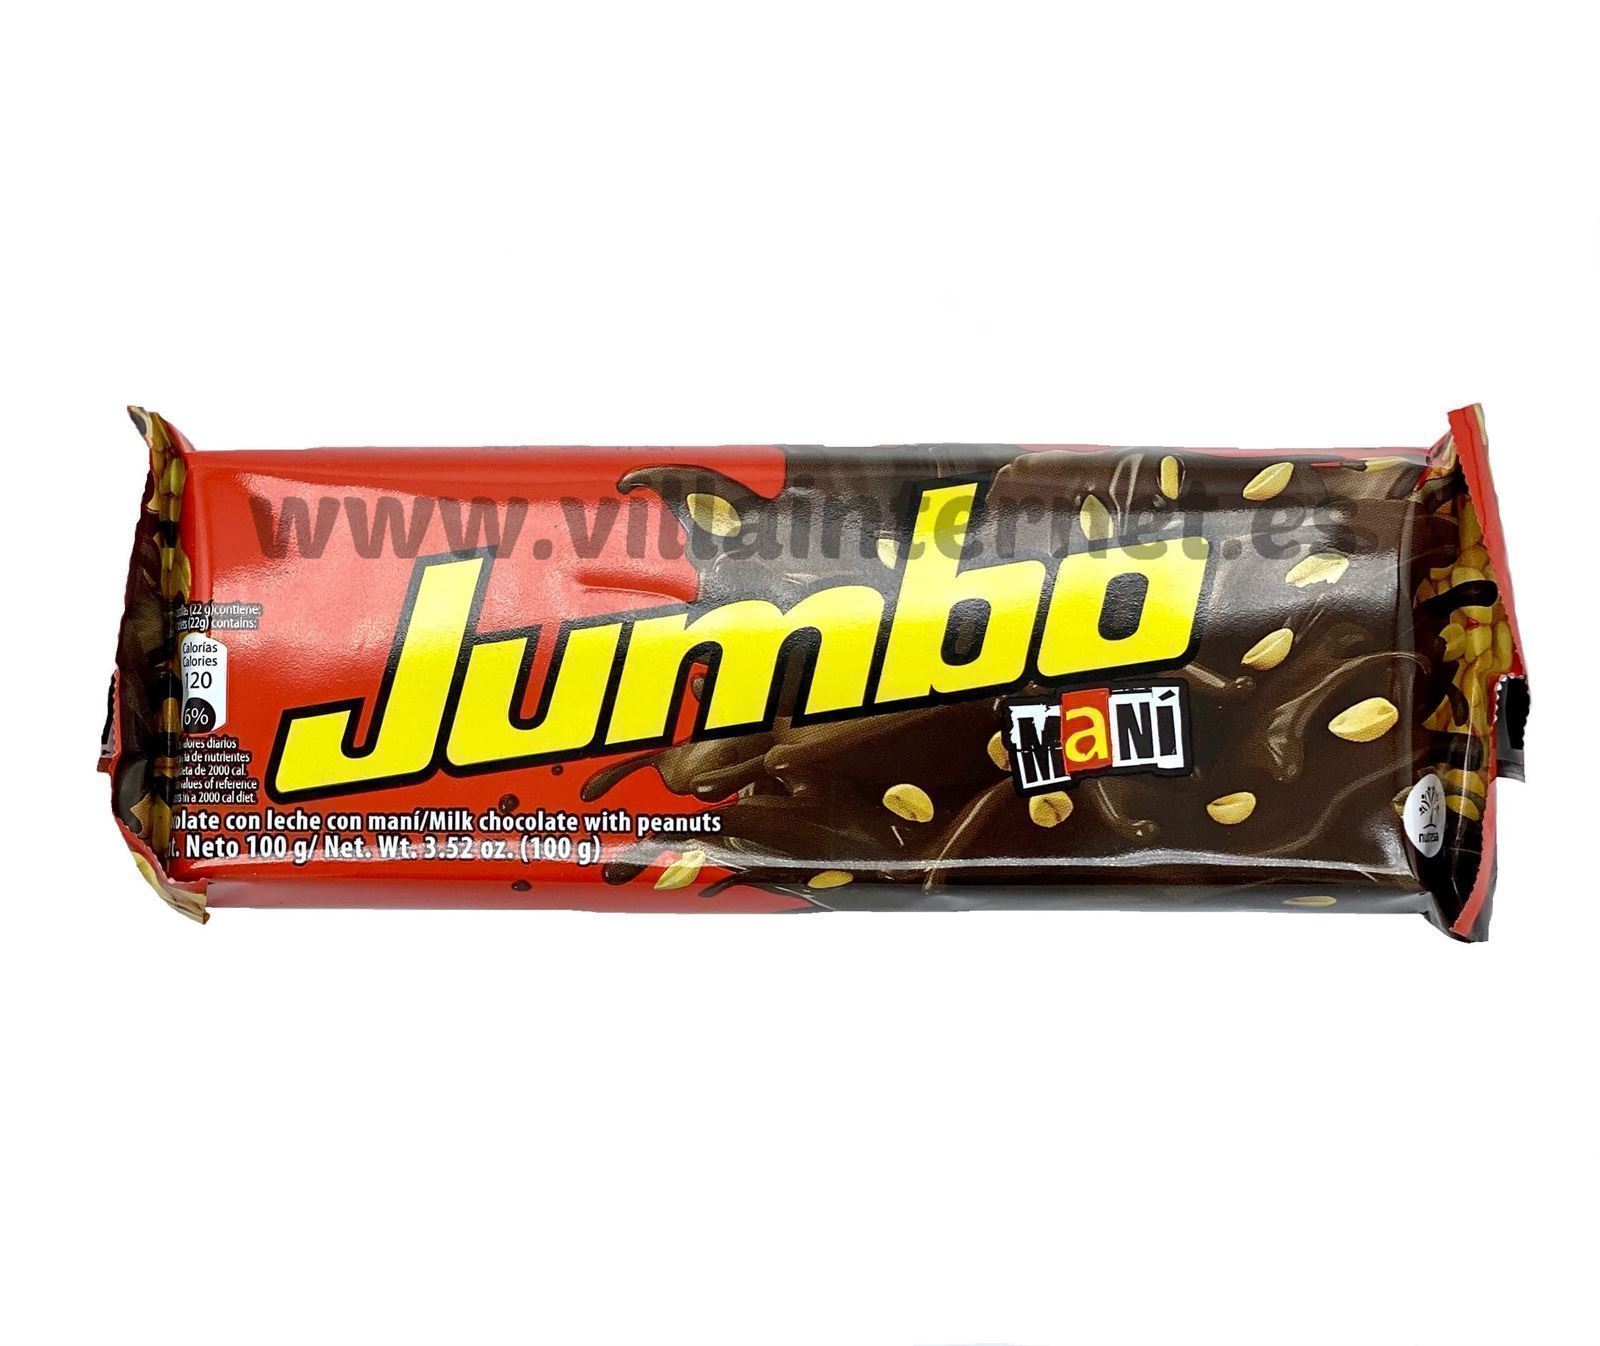 Chocolate Jumbo maní 90g - Imagen 1